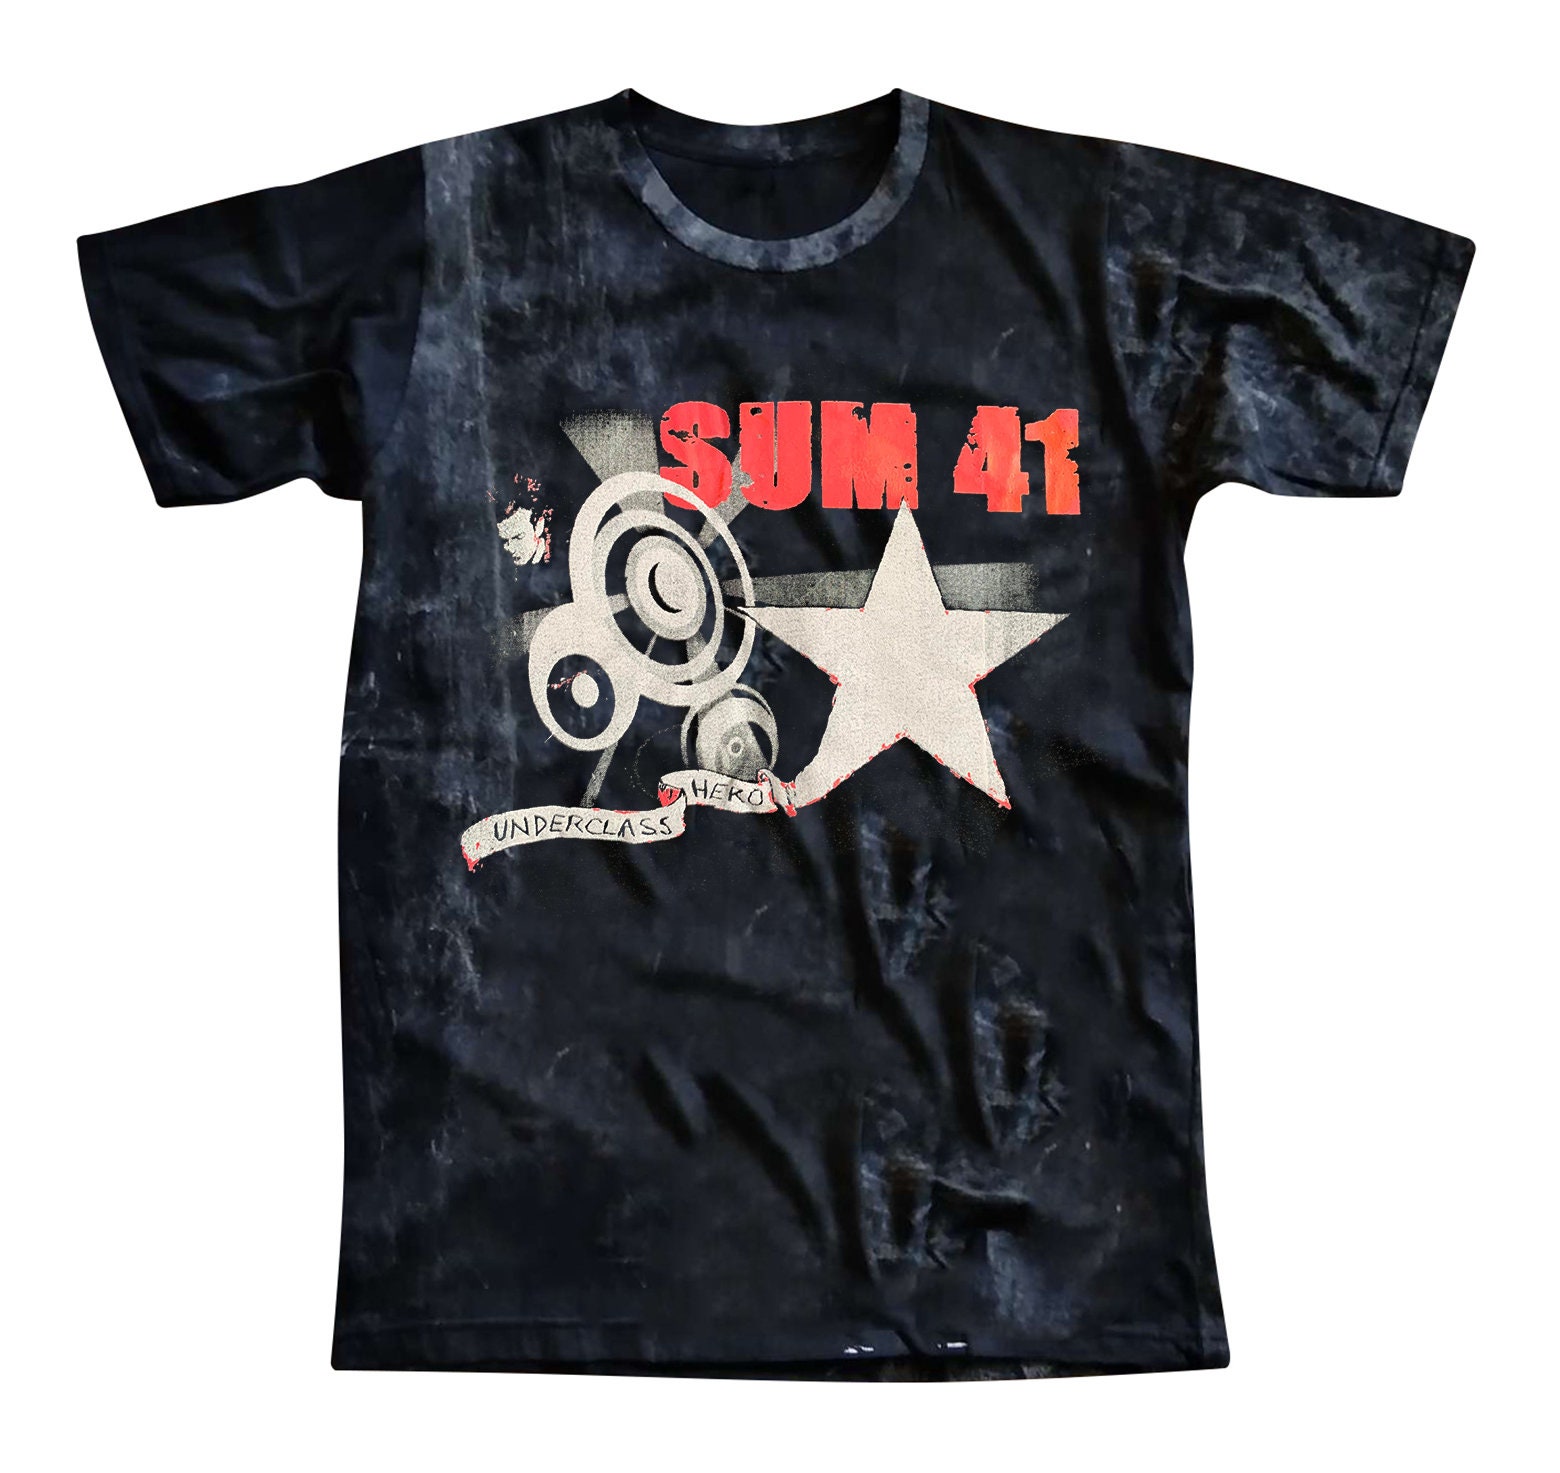 Sum 41 Music Band Classic 3D T Shirt